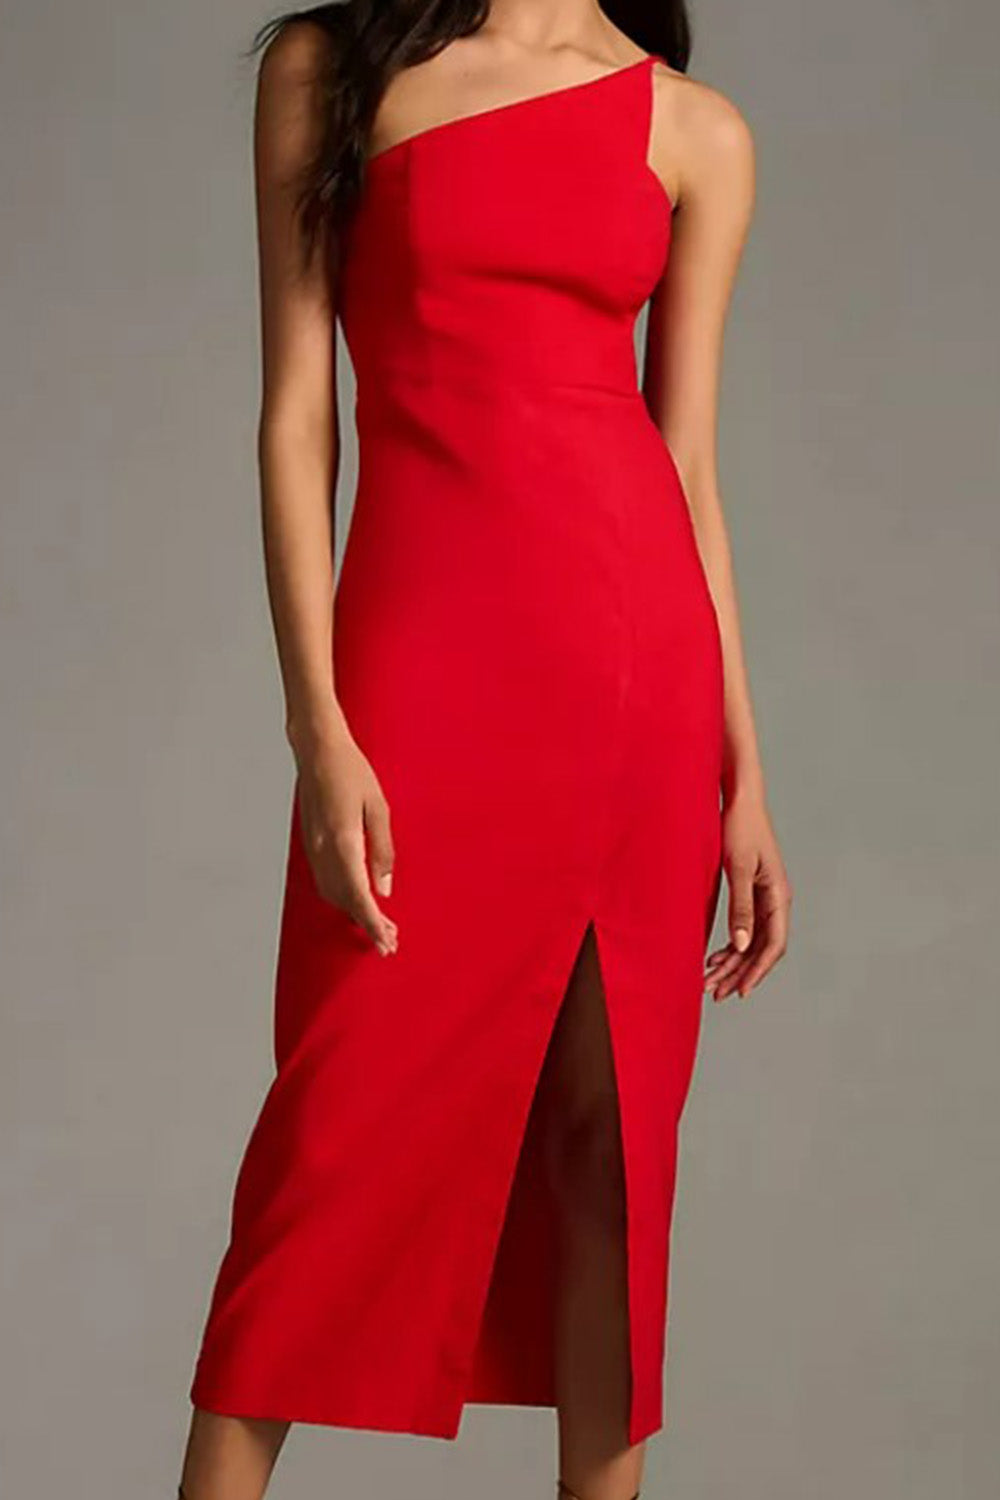 Stunning Red Dress